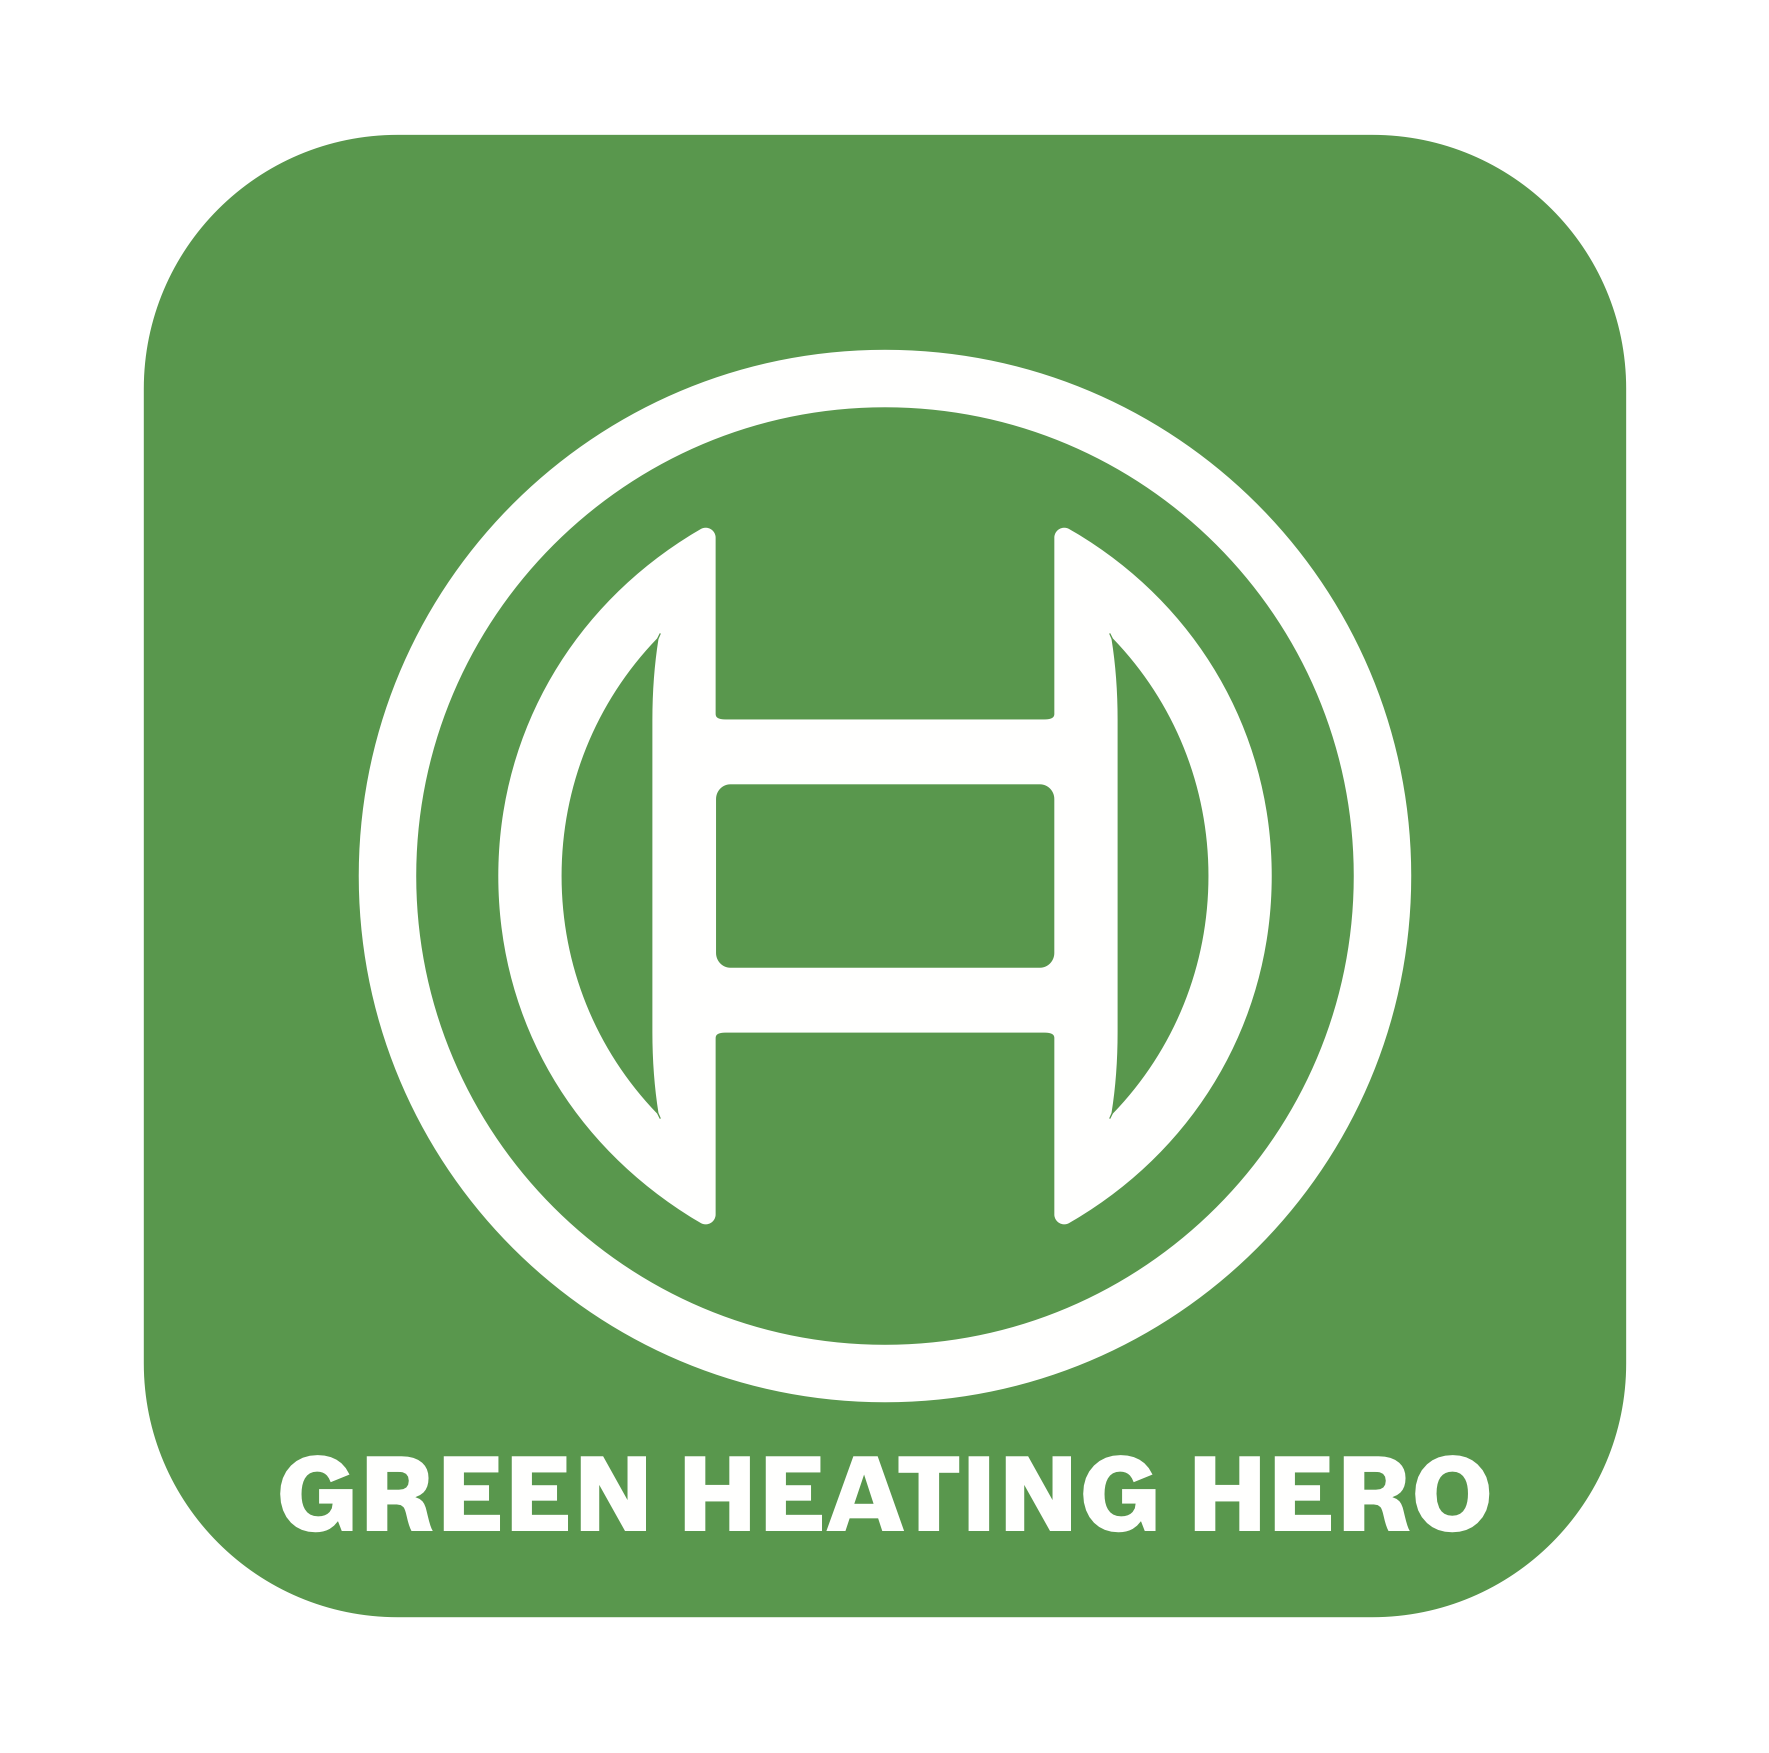 Green heating hero Northampton